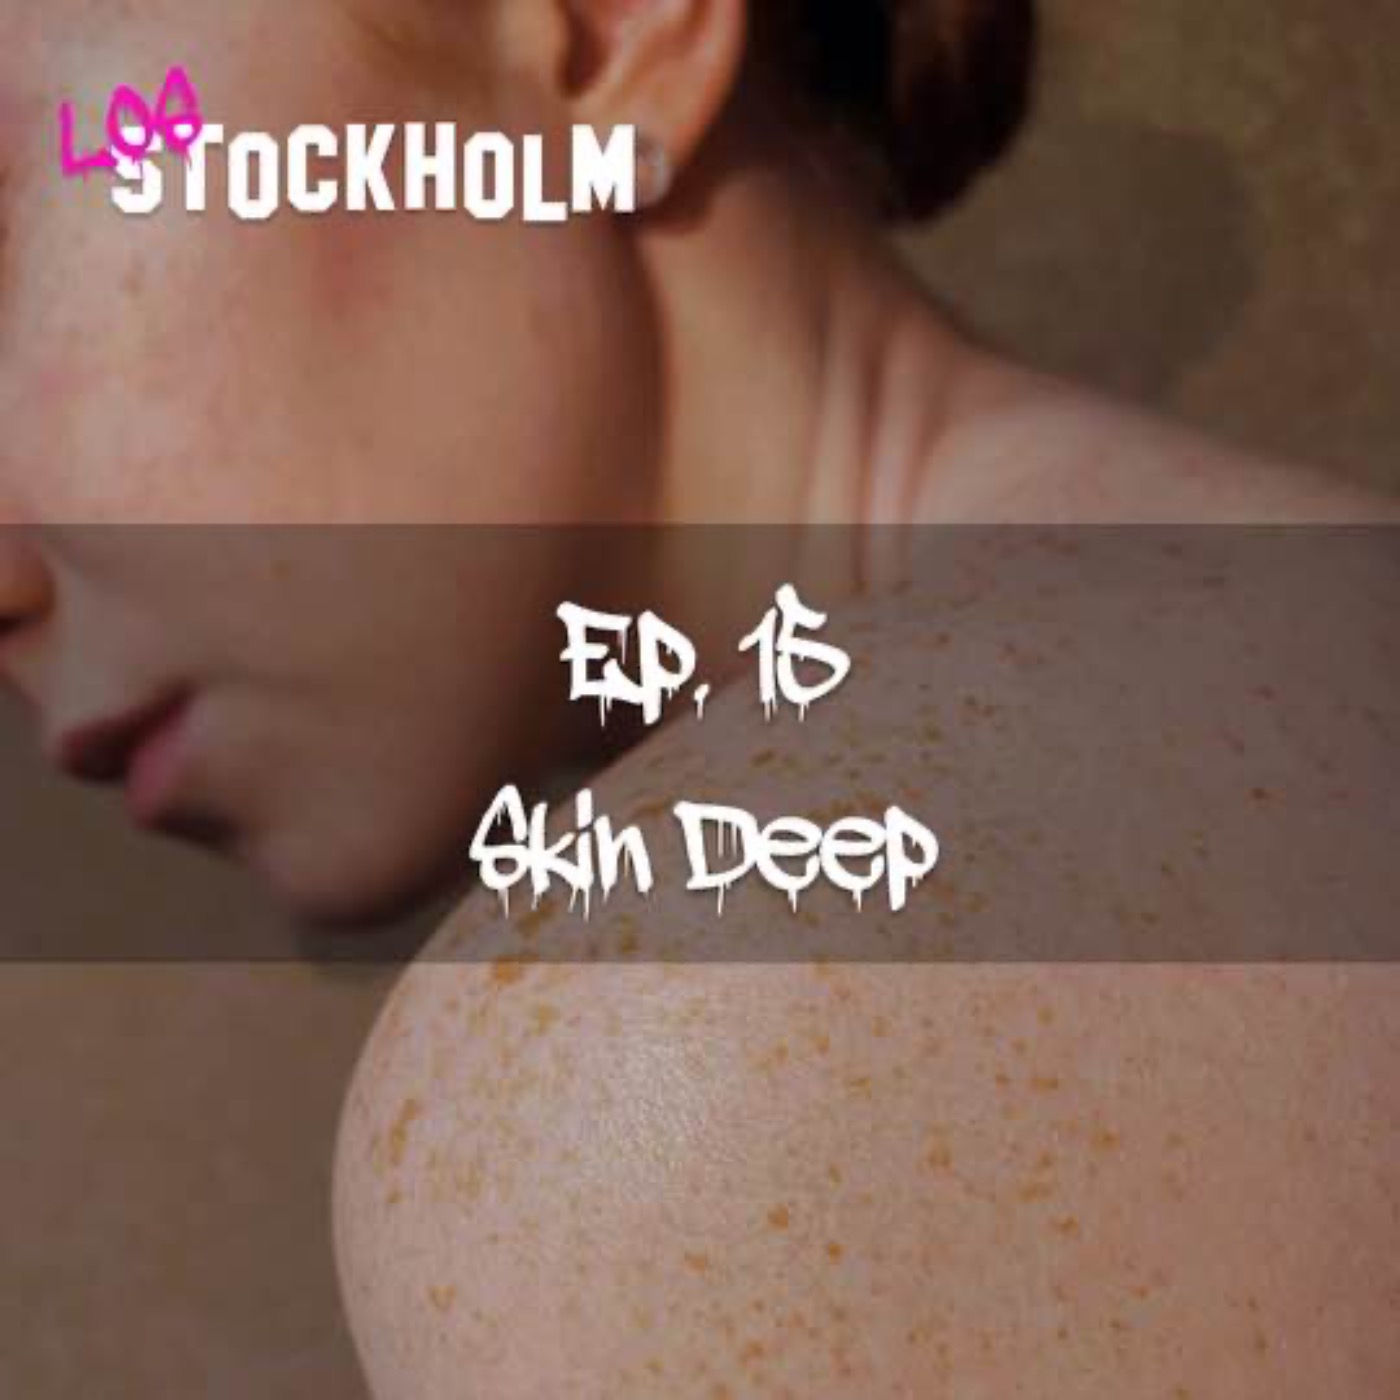 EPISODE 15: skin deep